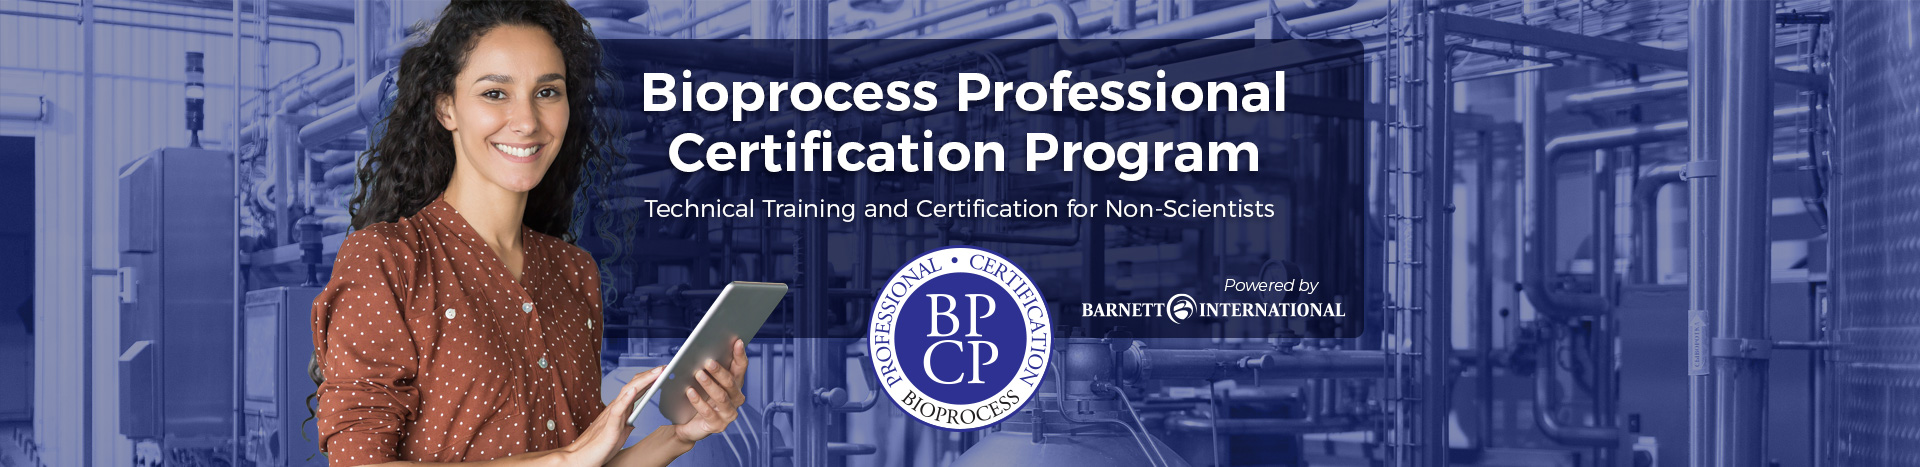 Bioprocess Professional Certification Program